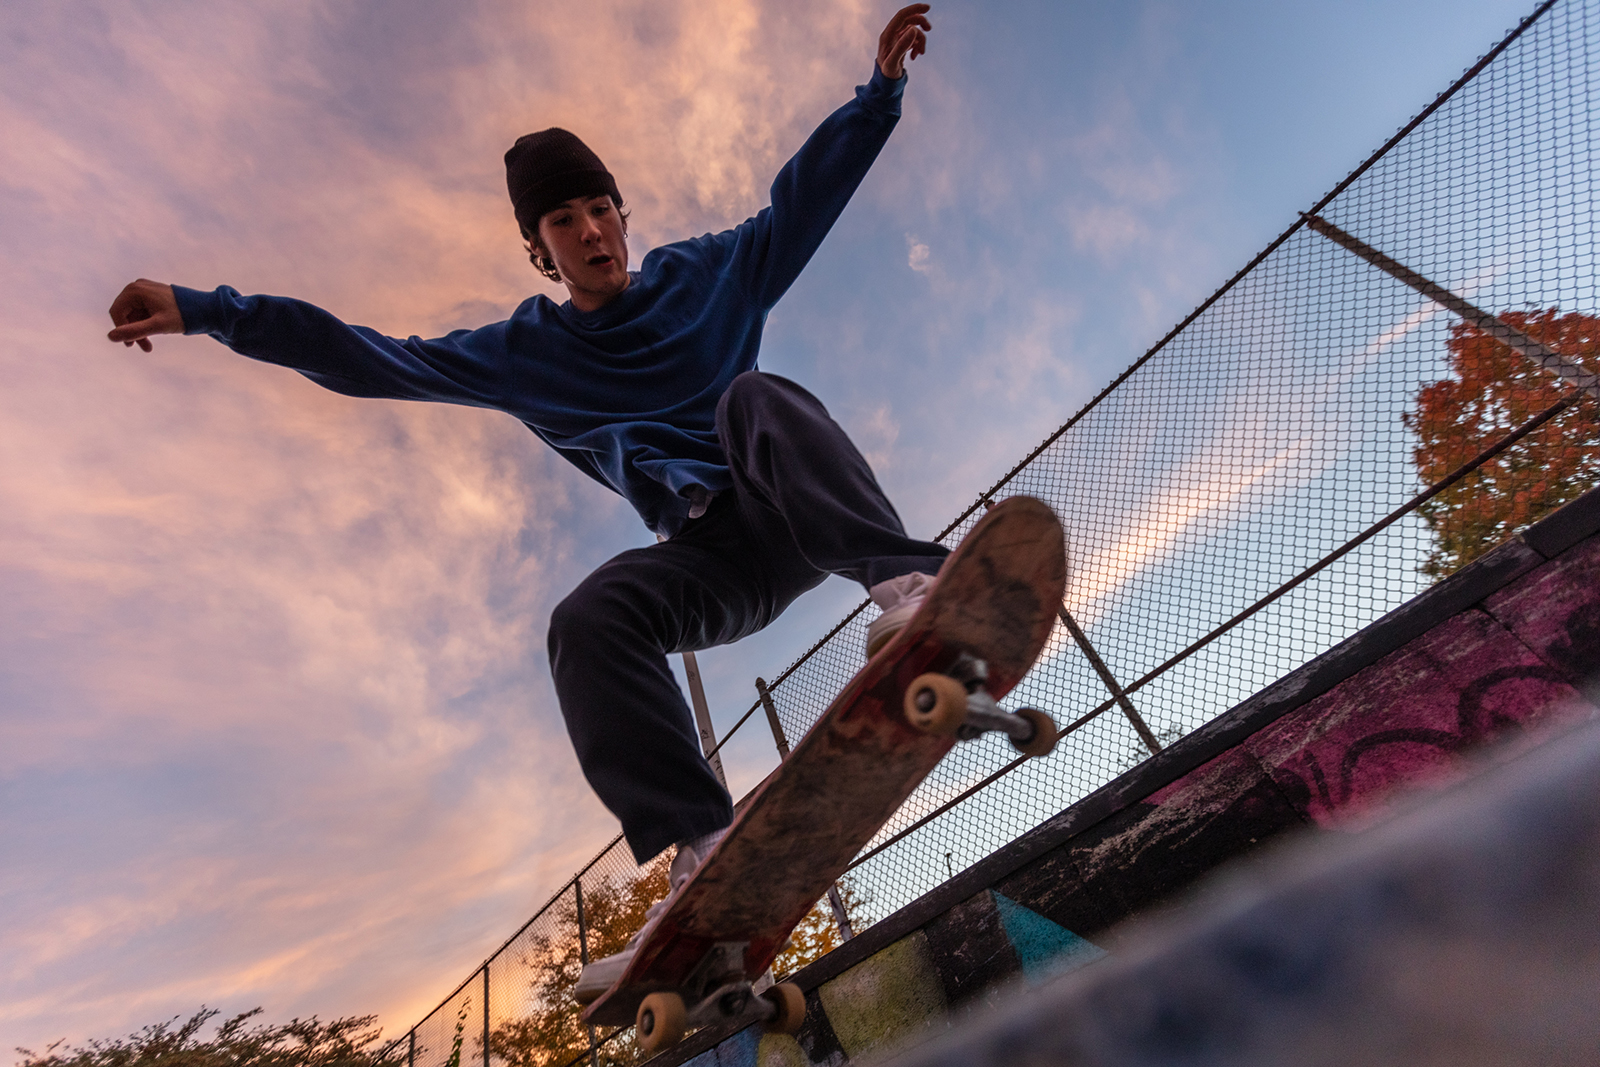 skatebording in syracuse new york